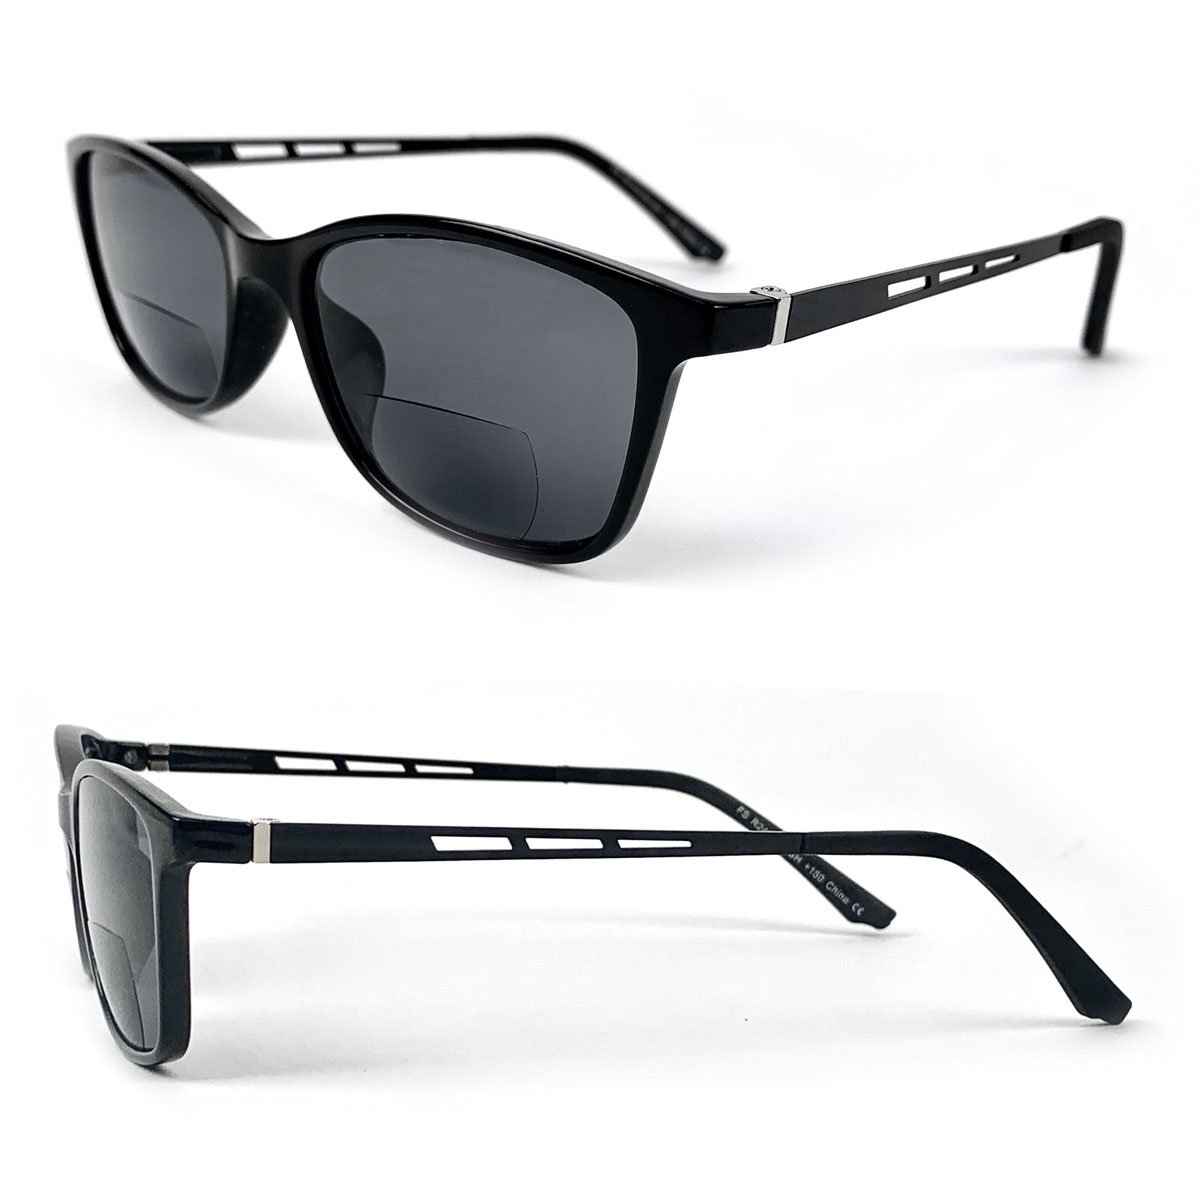 Bifocal Sun Readers Classic Frame Geek Retro Style Reading Sunglasses - Black, +3.00